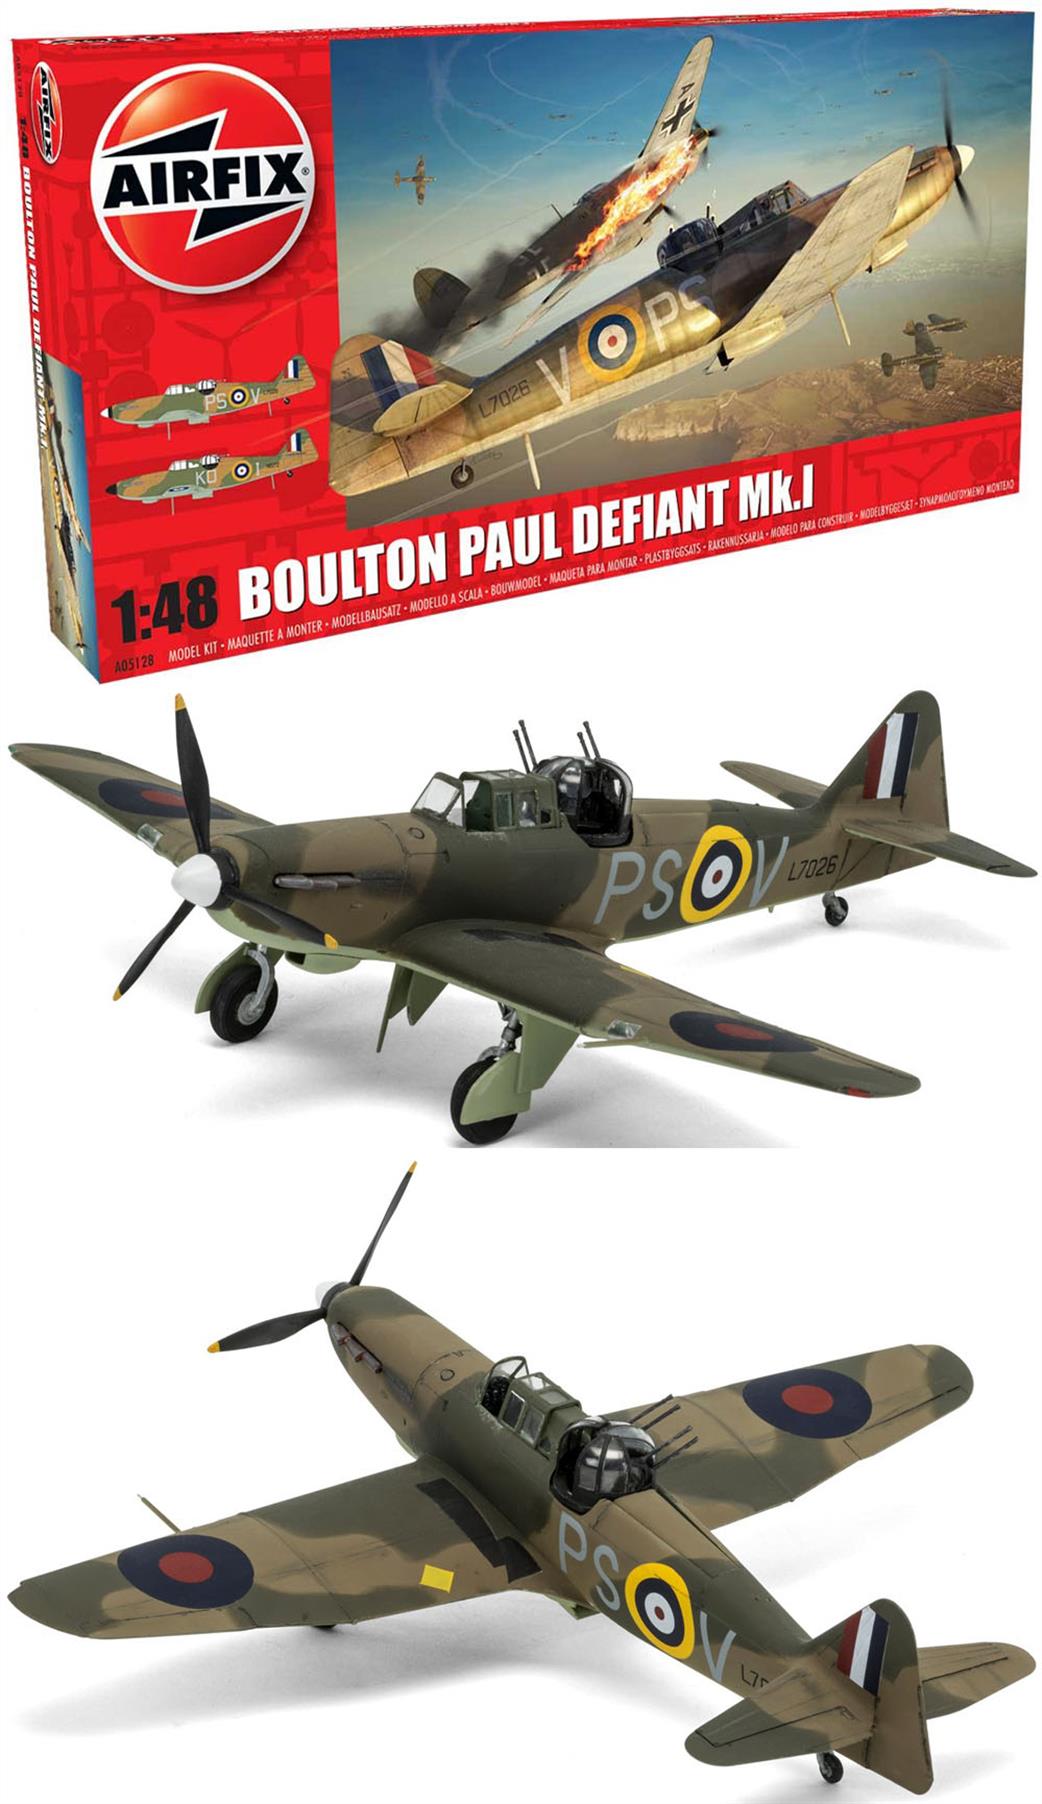 Airfix 1/48 A05128 Boulton Paul Defiant Mk1 WW2 Fighter Aircraft Kit